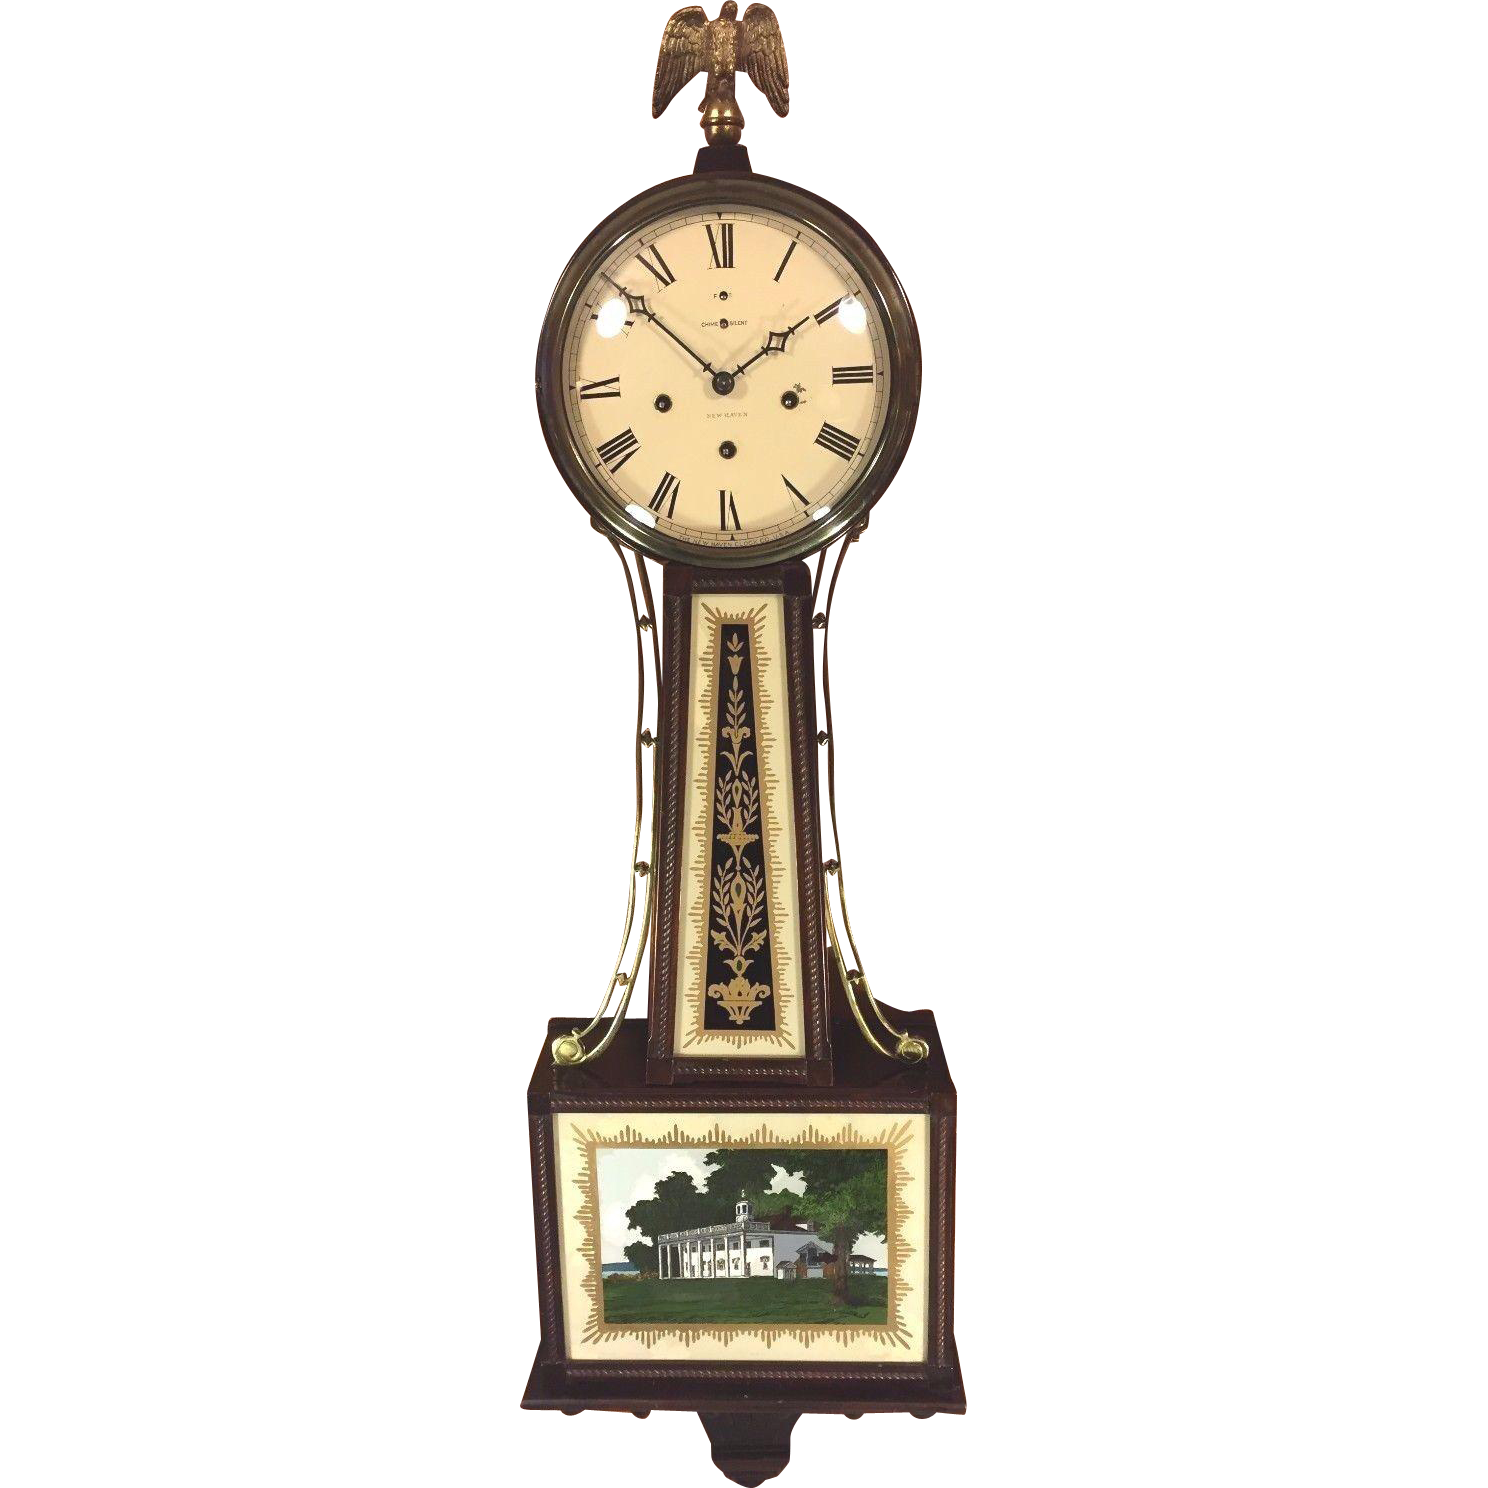 Download PNG image - Banjo Clock PNG Transparent Image 